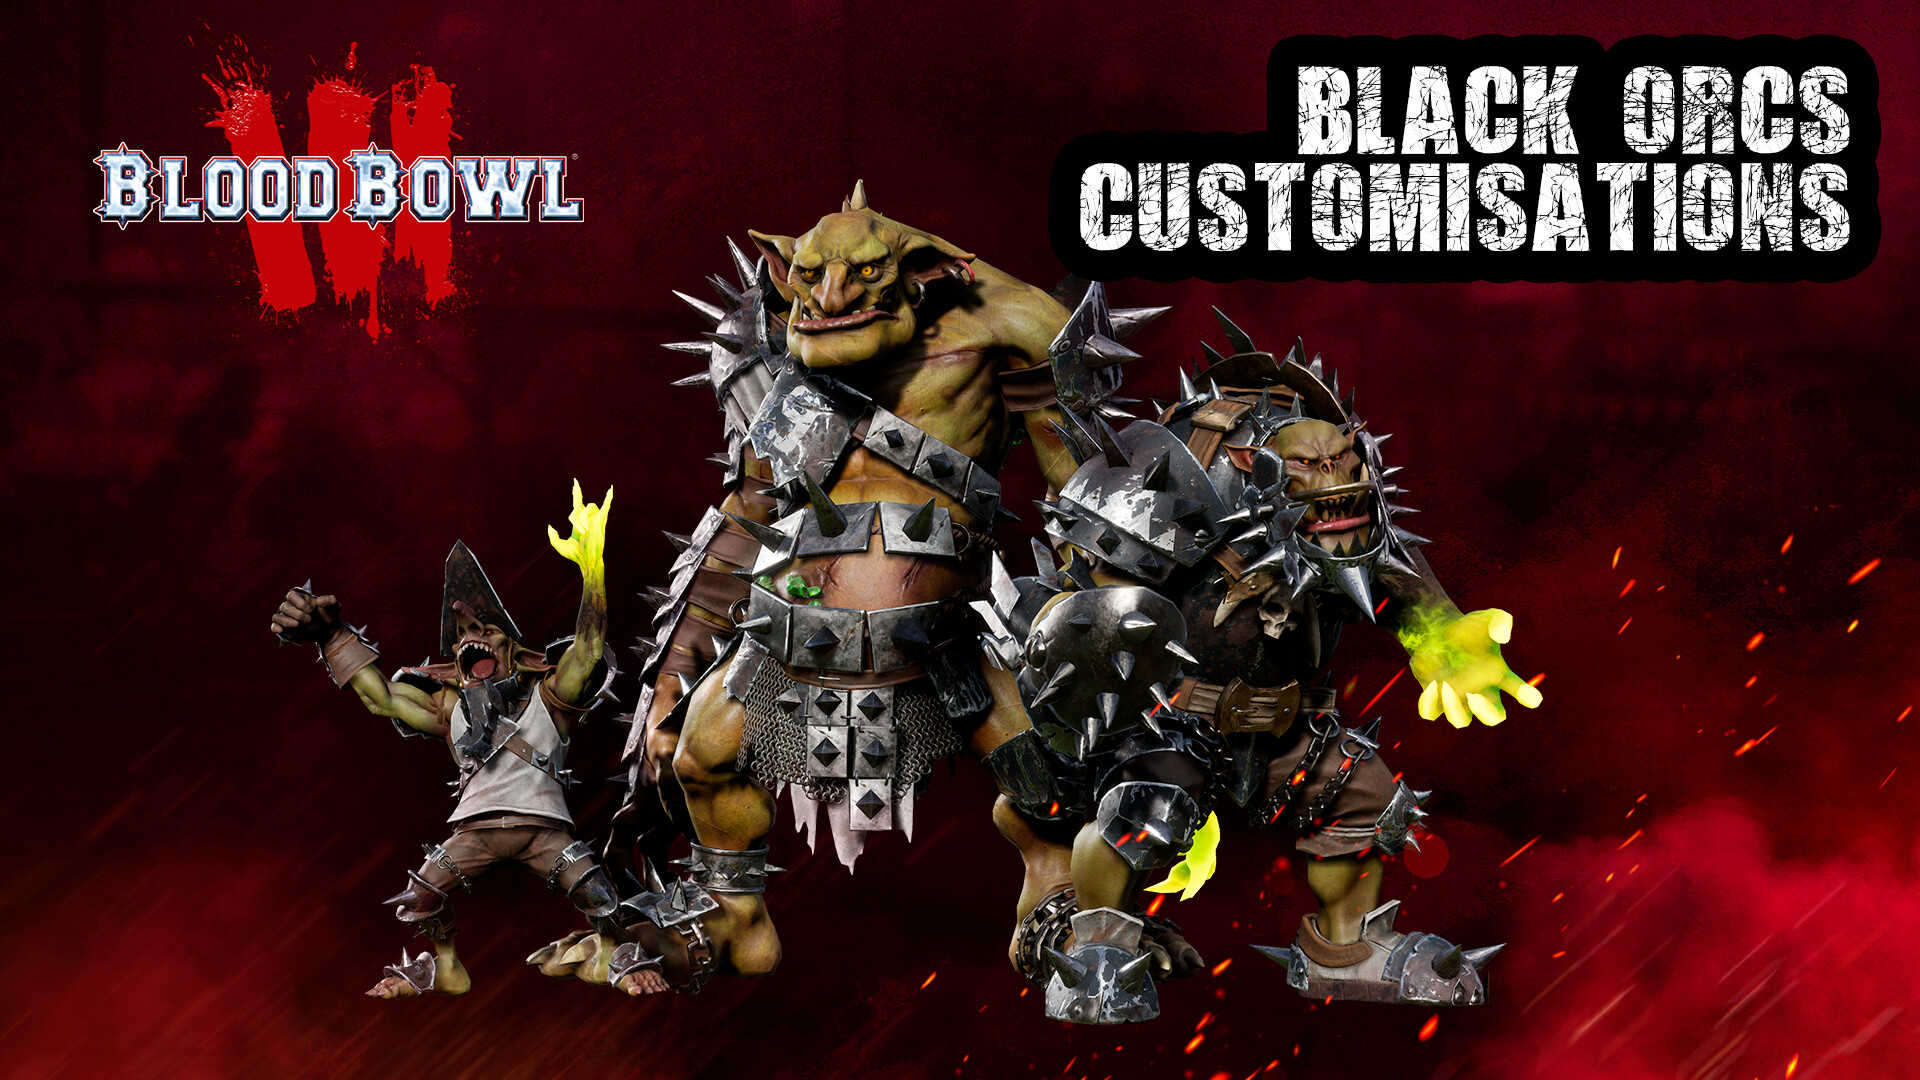 Blood Bowl 3 - Black Orcs Customizations DLC Steam CD Key 3.82 usd